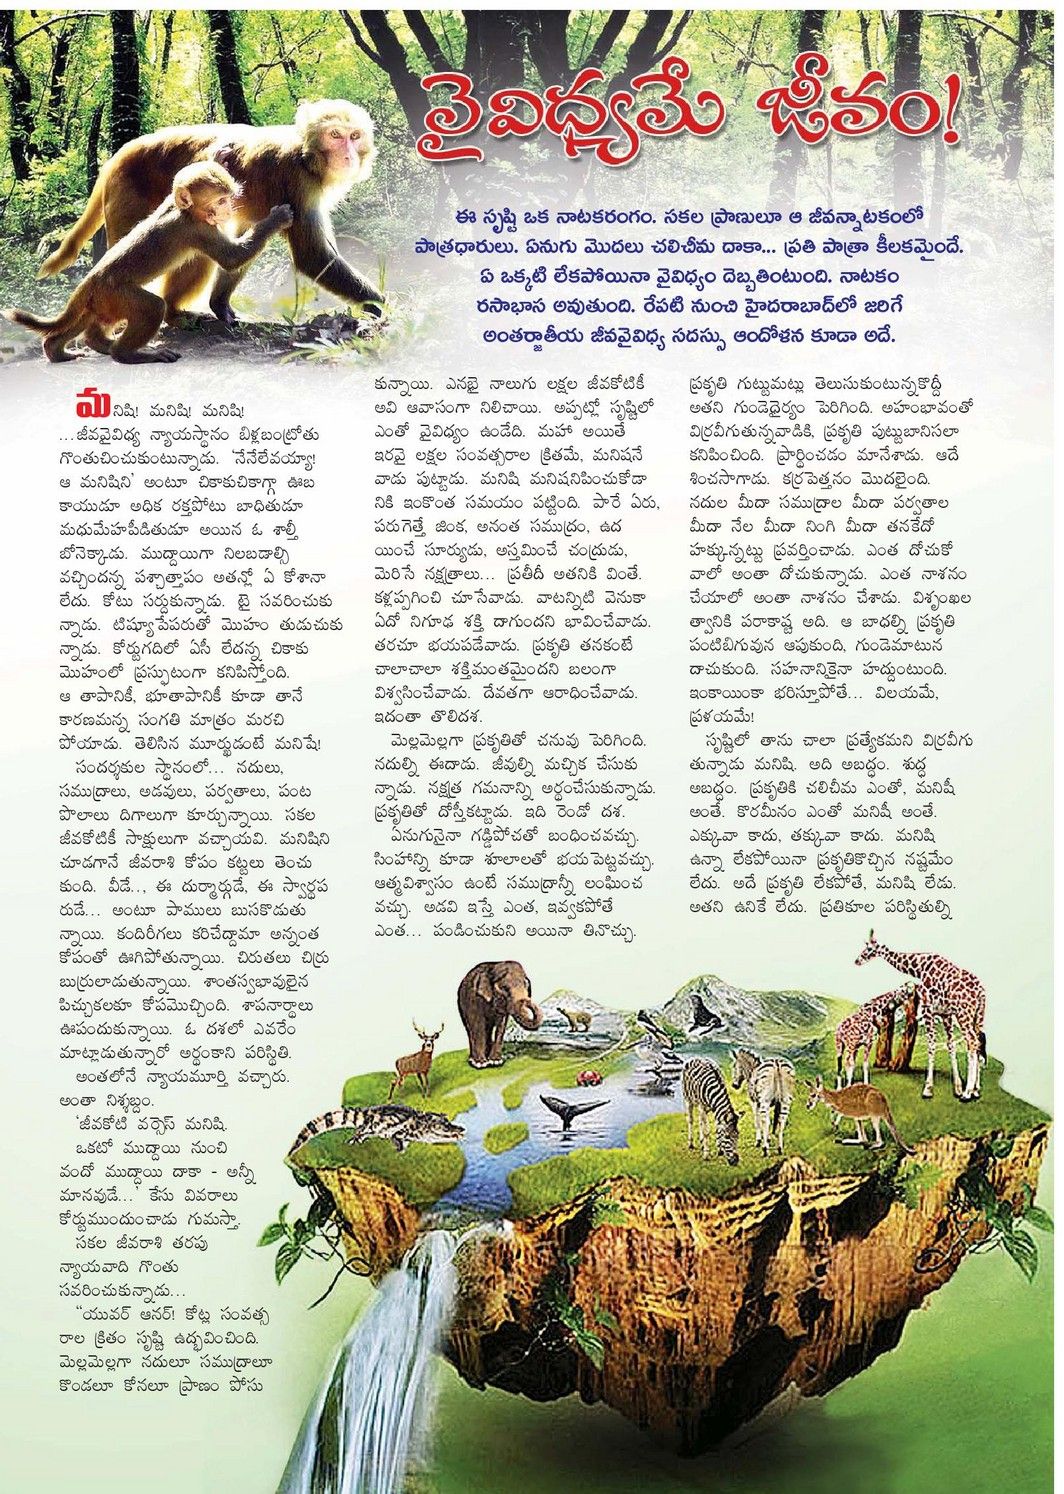 Infotainment, Jobs, Tourism, Telugu Stories, Personality Development: What is Biodiversity? is Biodiversity Important? Biodiversity Wallpaper